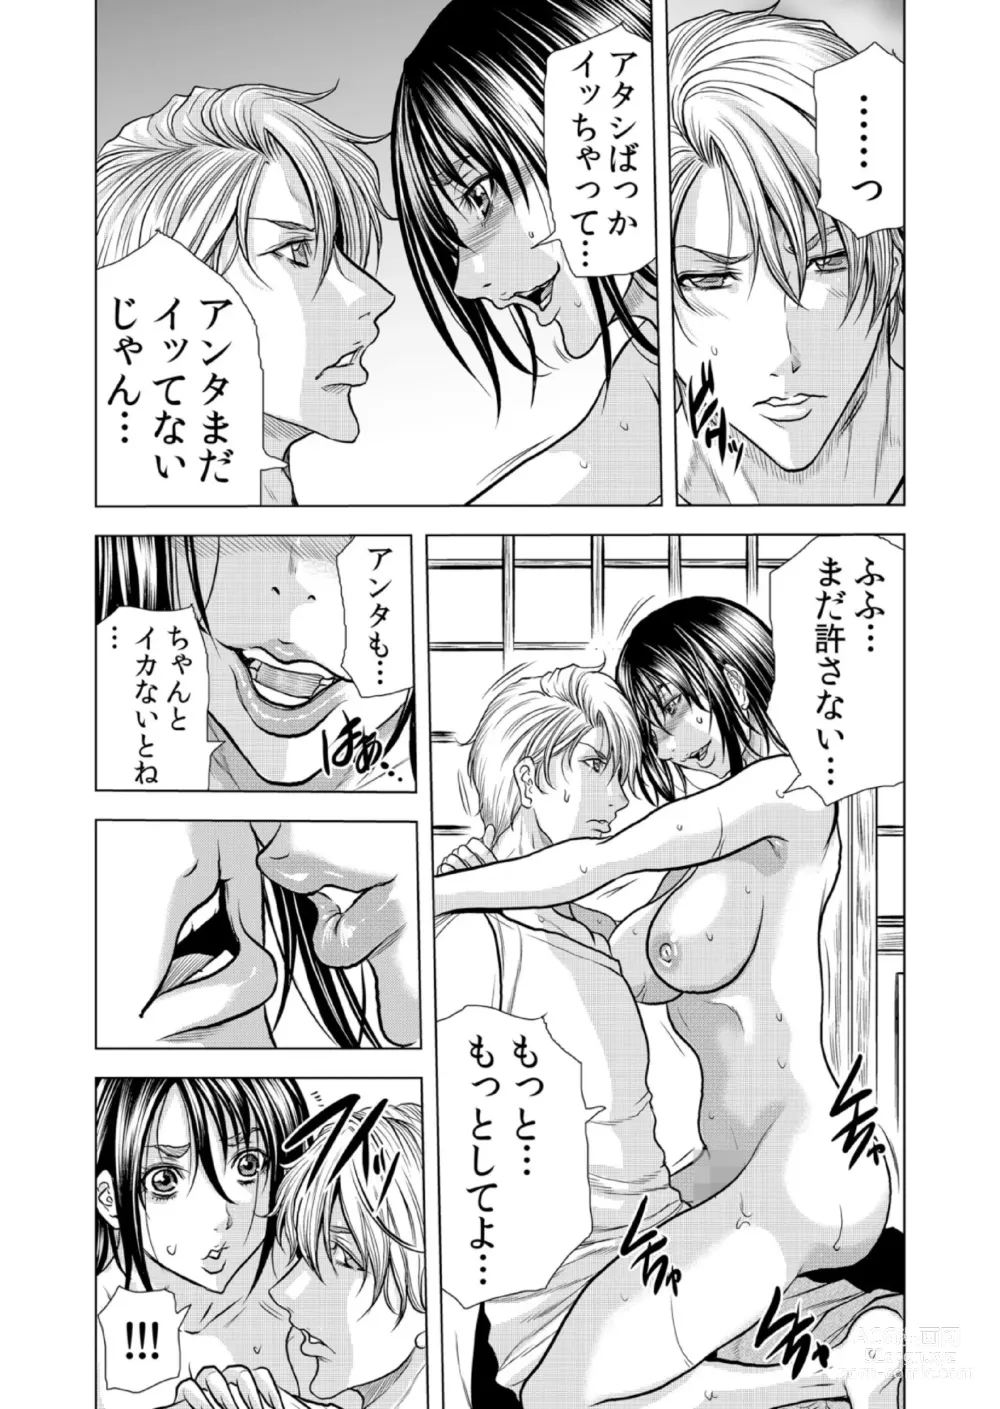 Page 3 of manga Mamasan,yobai ha OK desuka? VOL10